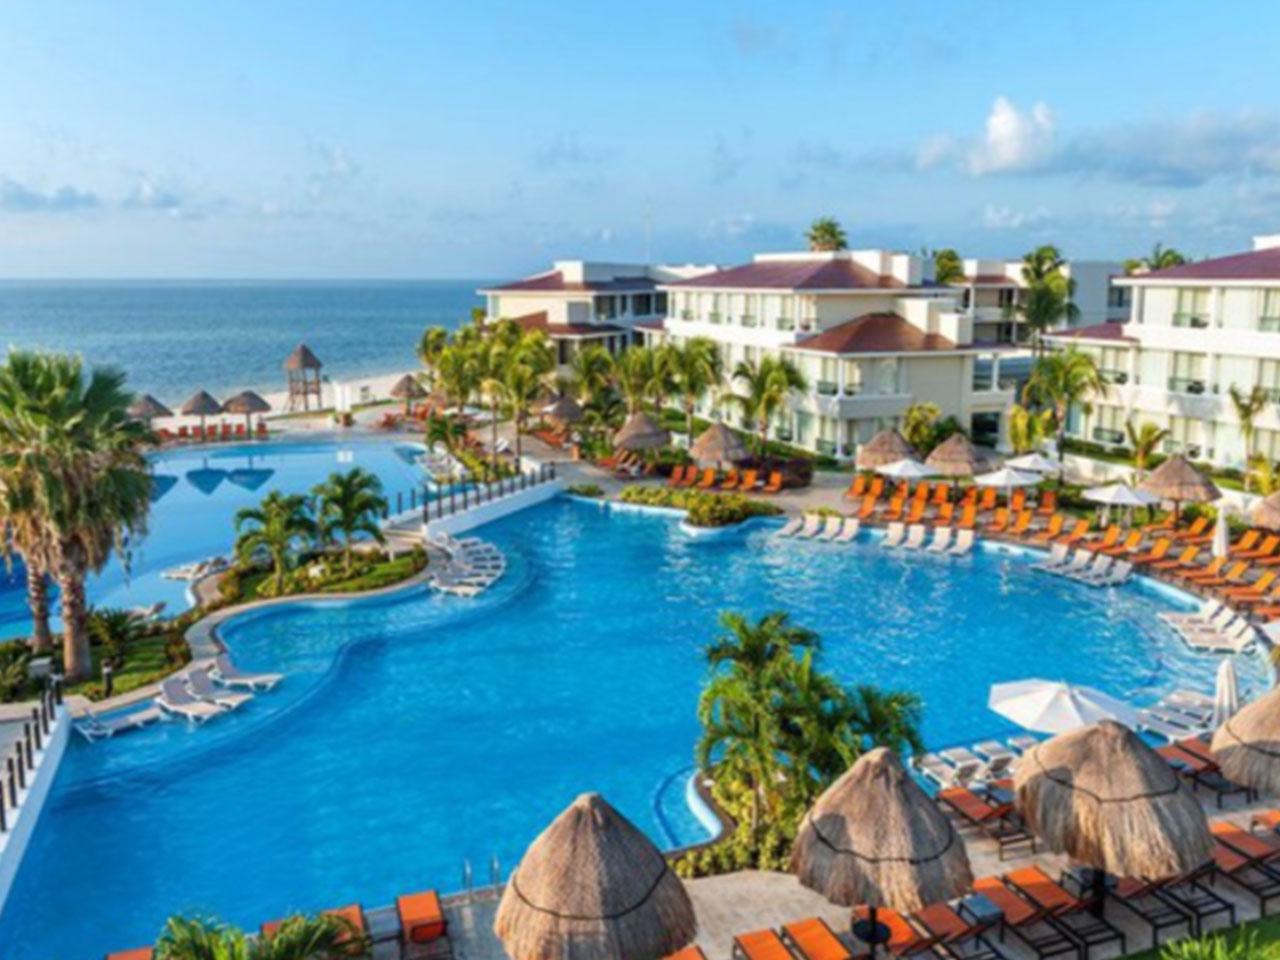 Bodas en la playa paquetes - alberca - Moon Palace Cancun - Moon Palace Hotel - Paquetes de boda en Cancun - Bodas en cancun